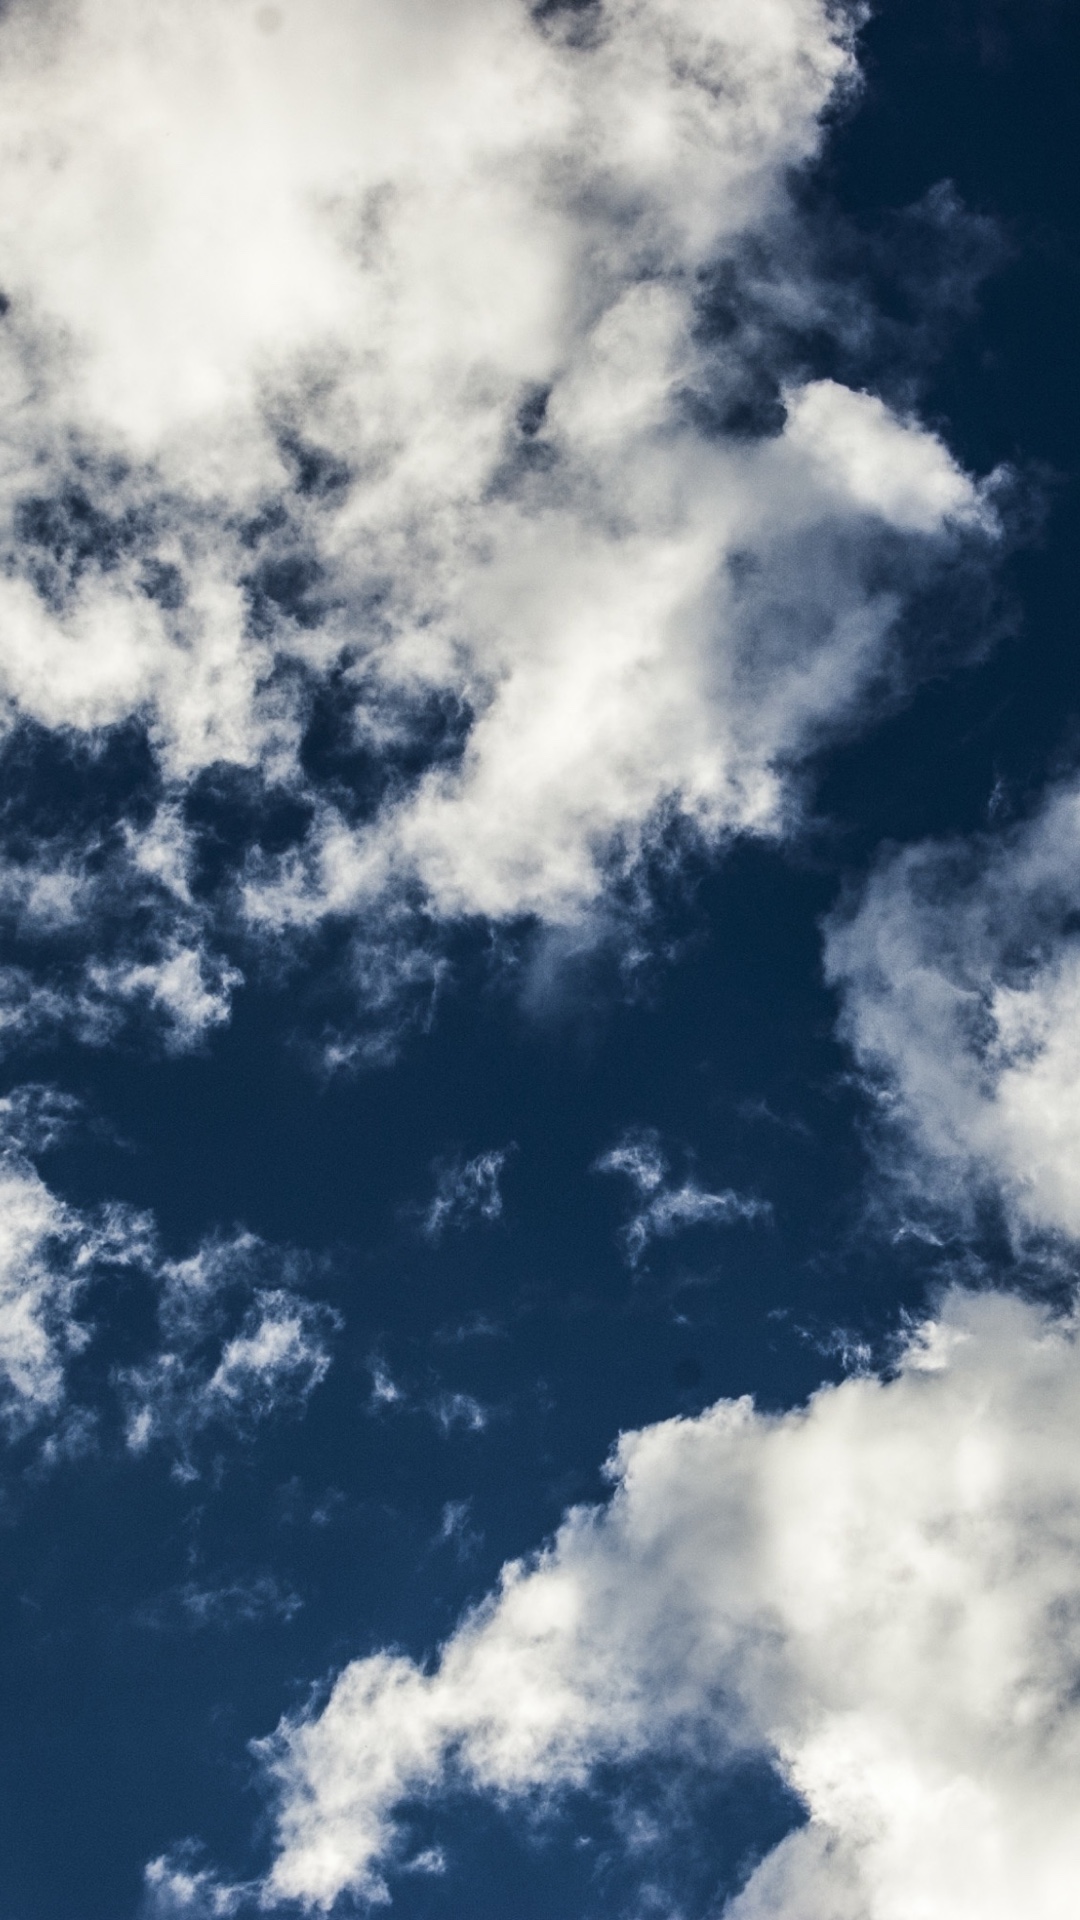 sky wallpaper for iphone,sky,cloud,daytime,blue,cumulus